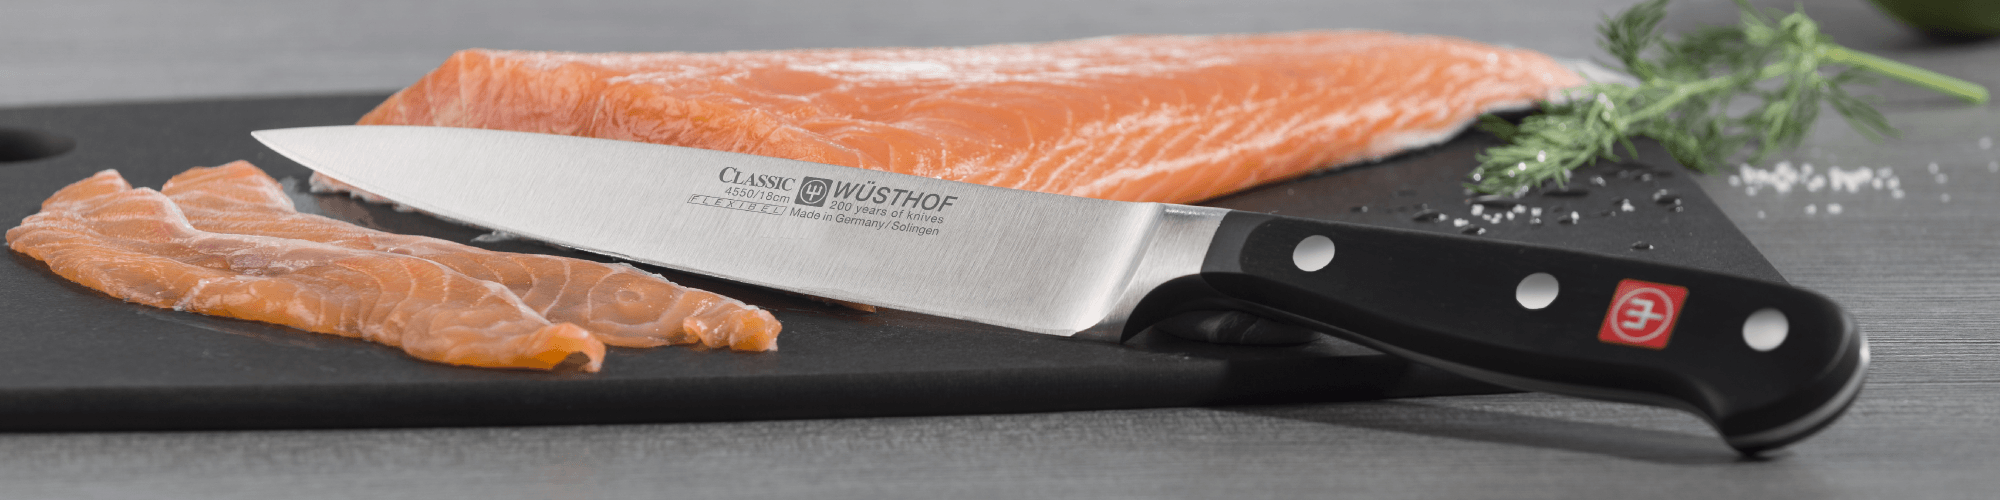 Wusthof - Classic Knife with Fish - Bozeman, Montana